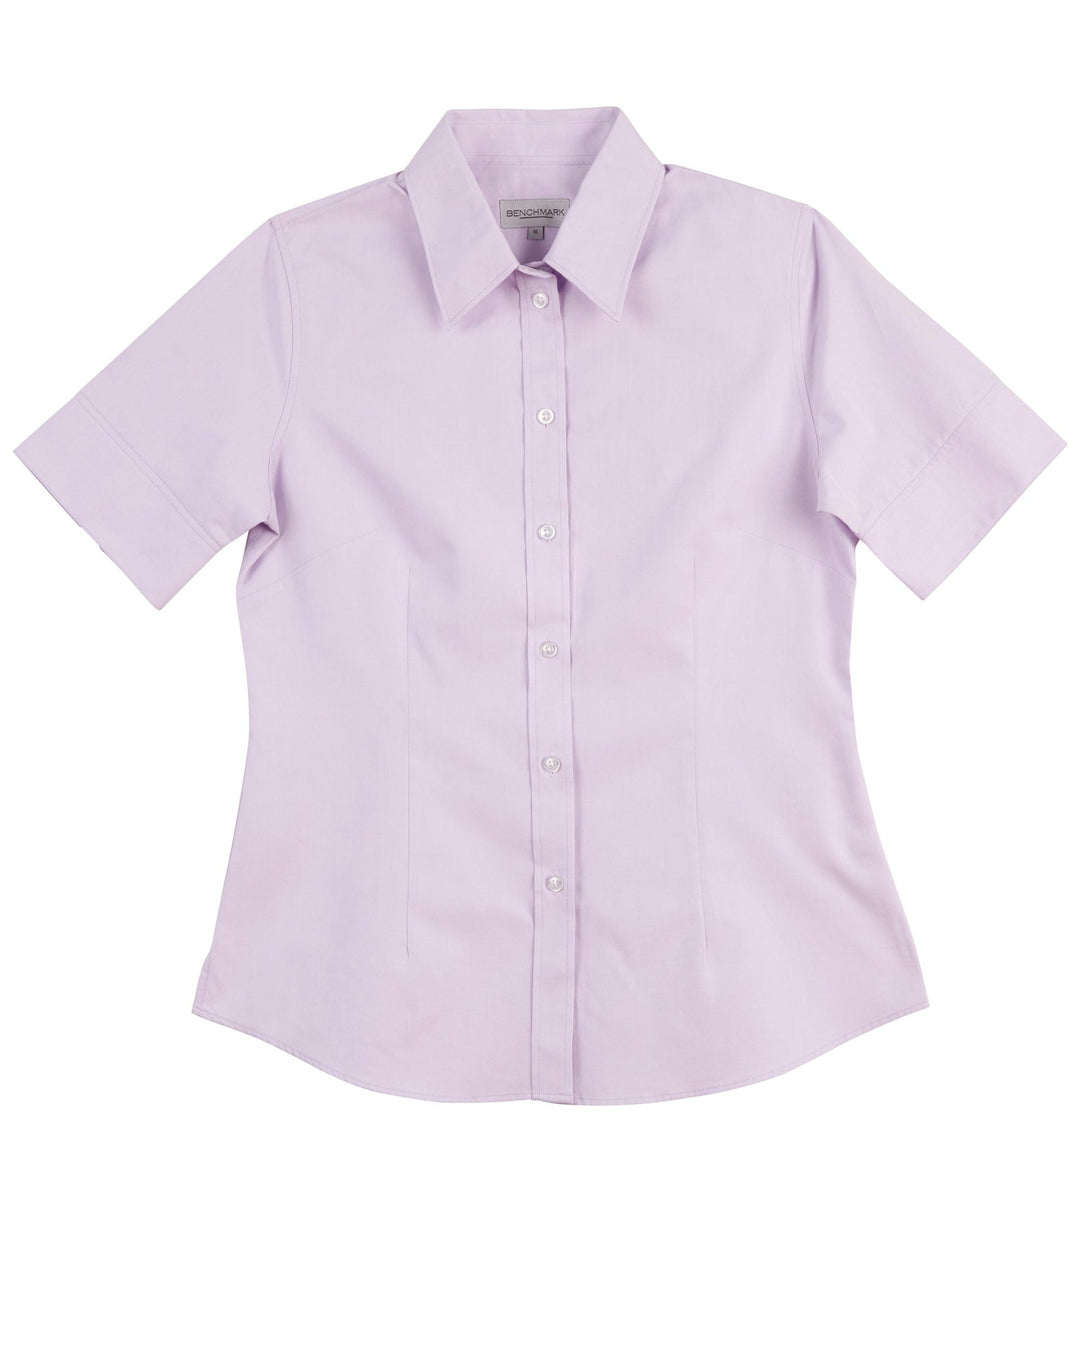 Benchmark M8040S Women's CVC Oxford Short Sleeve Shirt